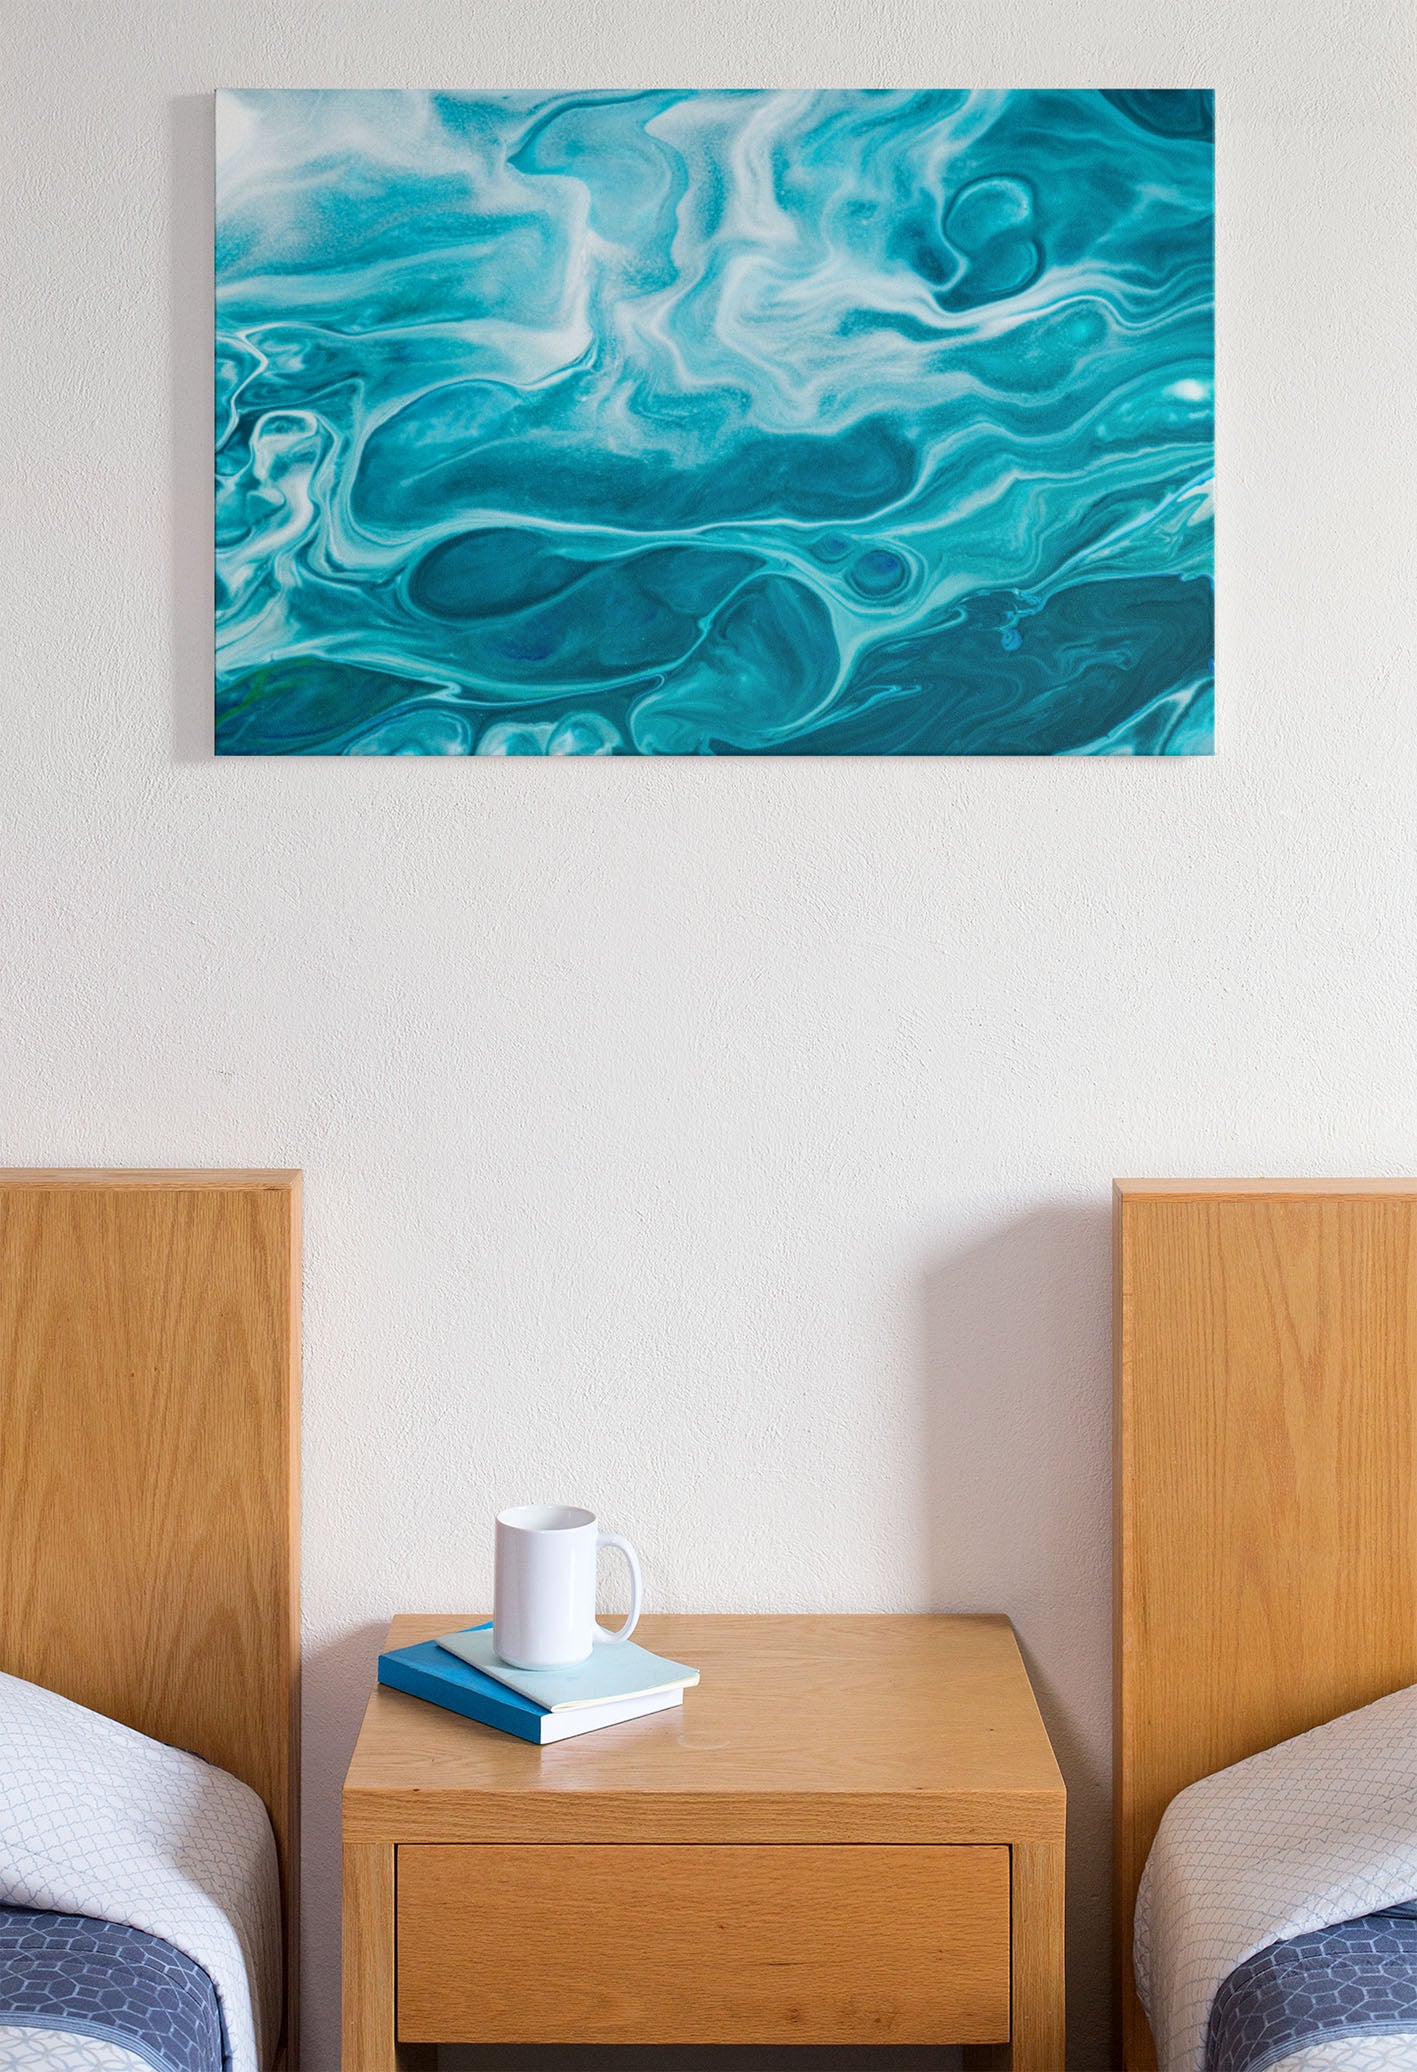 Quadro in tela canvas "Blue Sea"